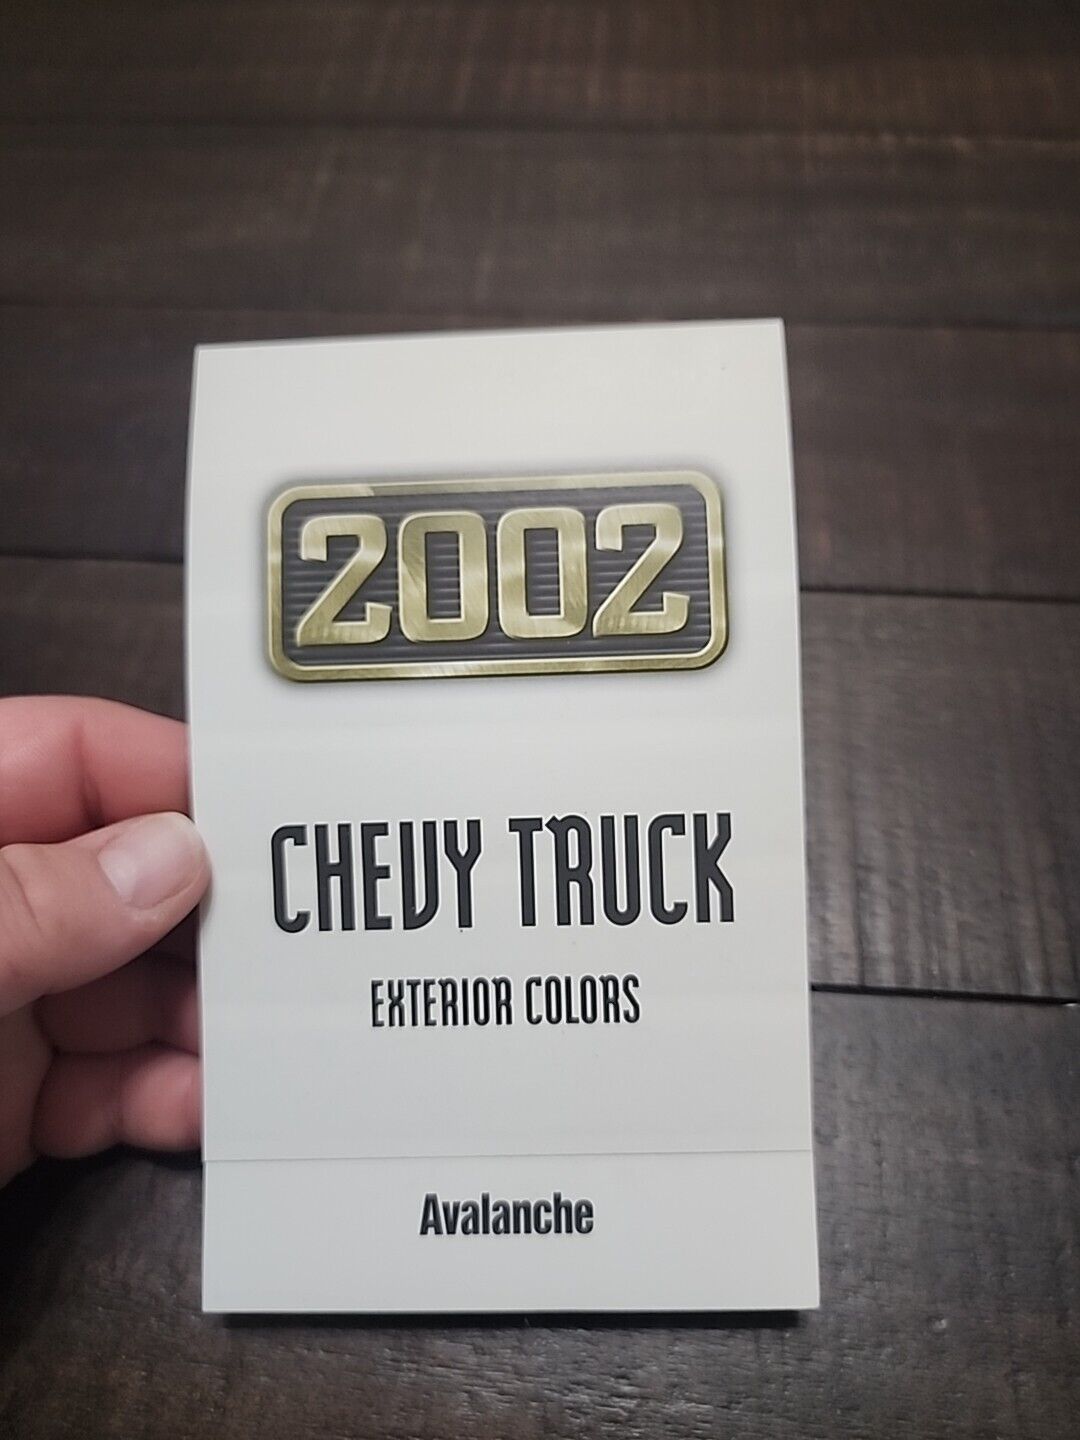 2002 Chevrolet Avalanche Exterior Colors Sales Literature/Brochure, Chevy